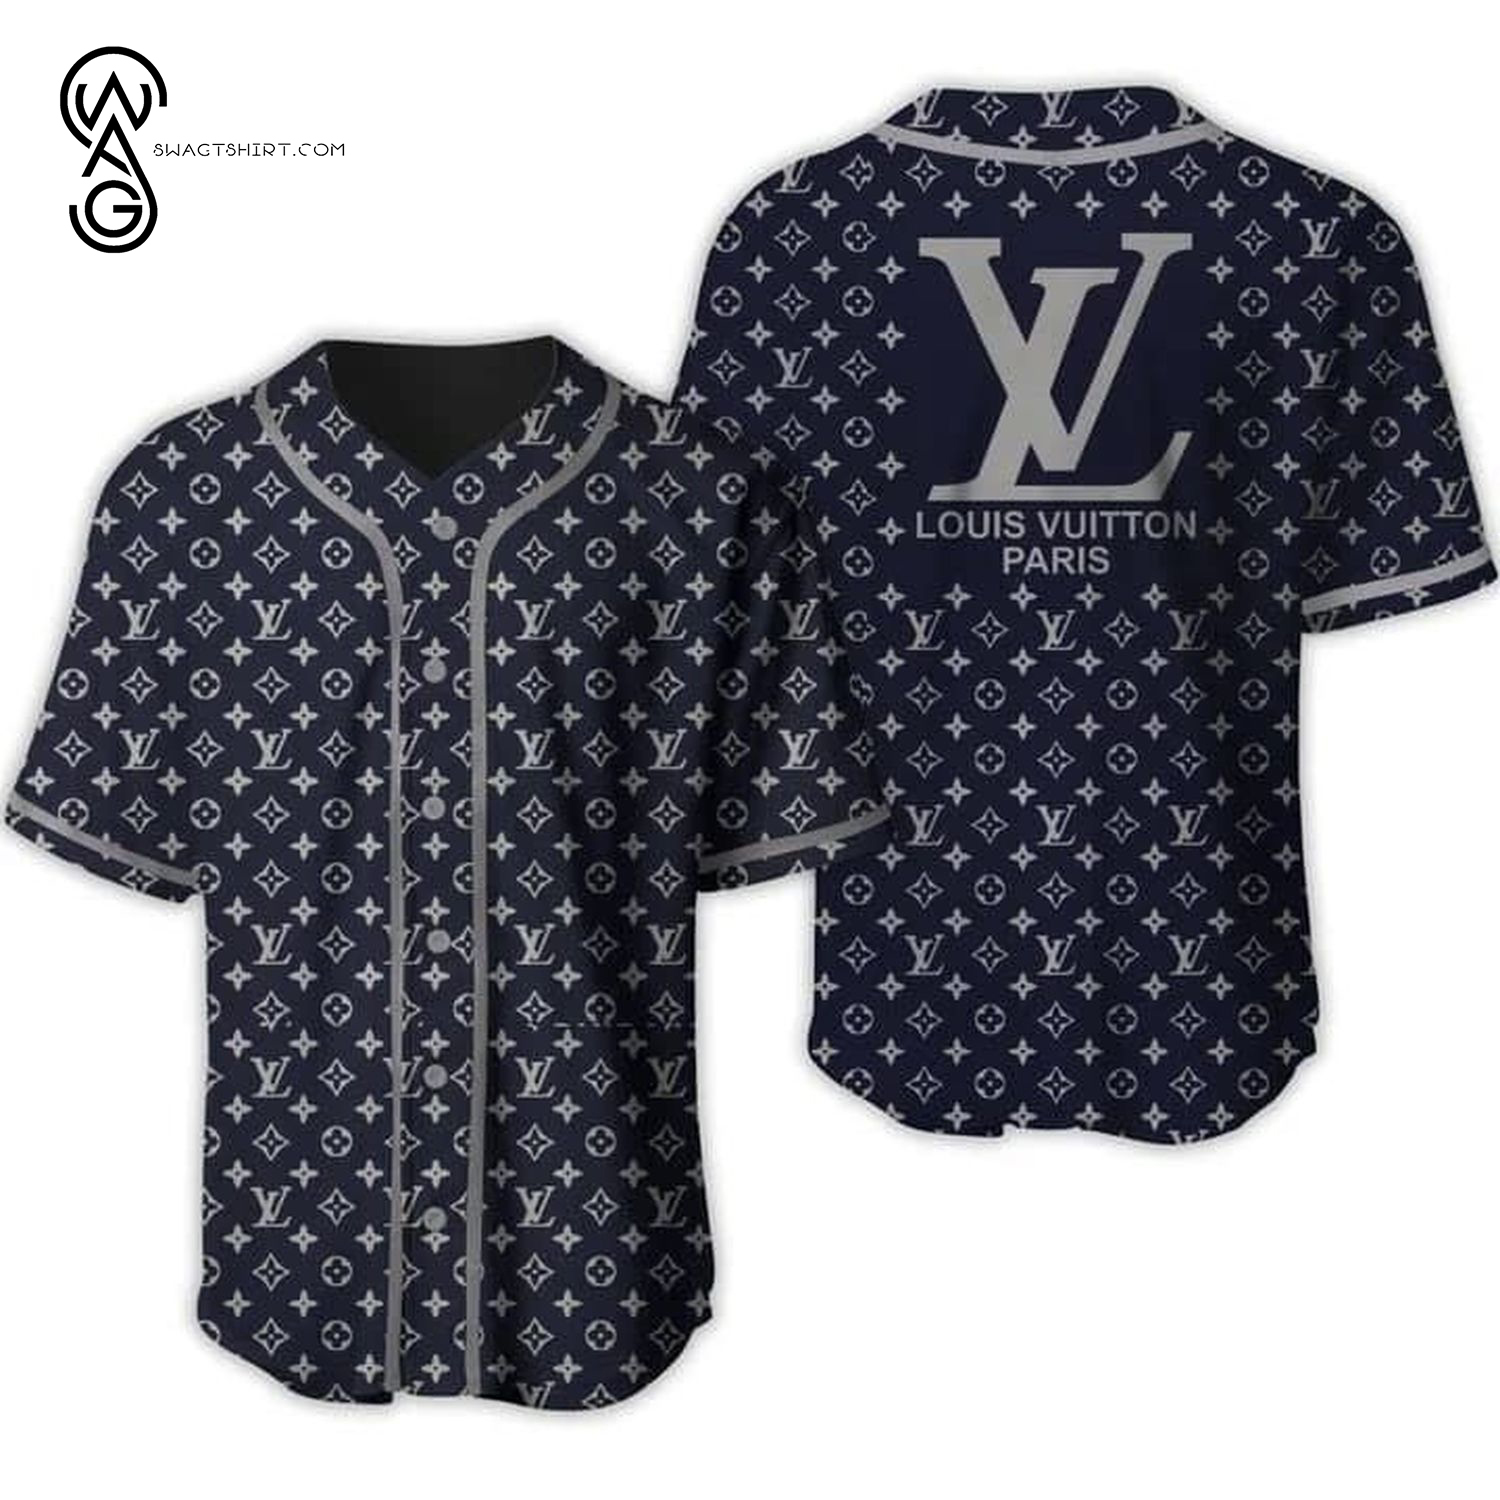 Louis Vuitton Paris Full Print Baseball Jersey